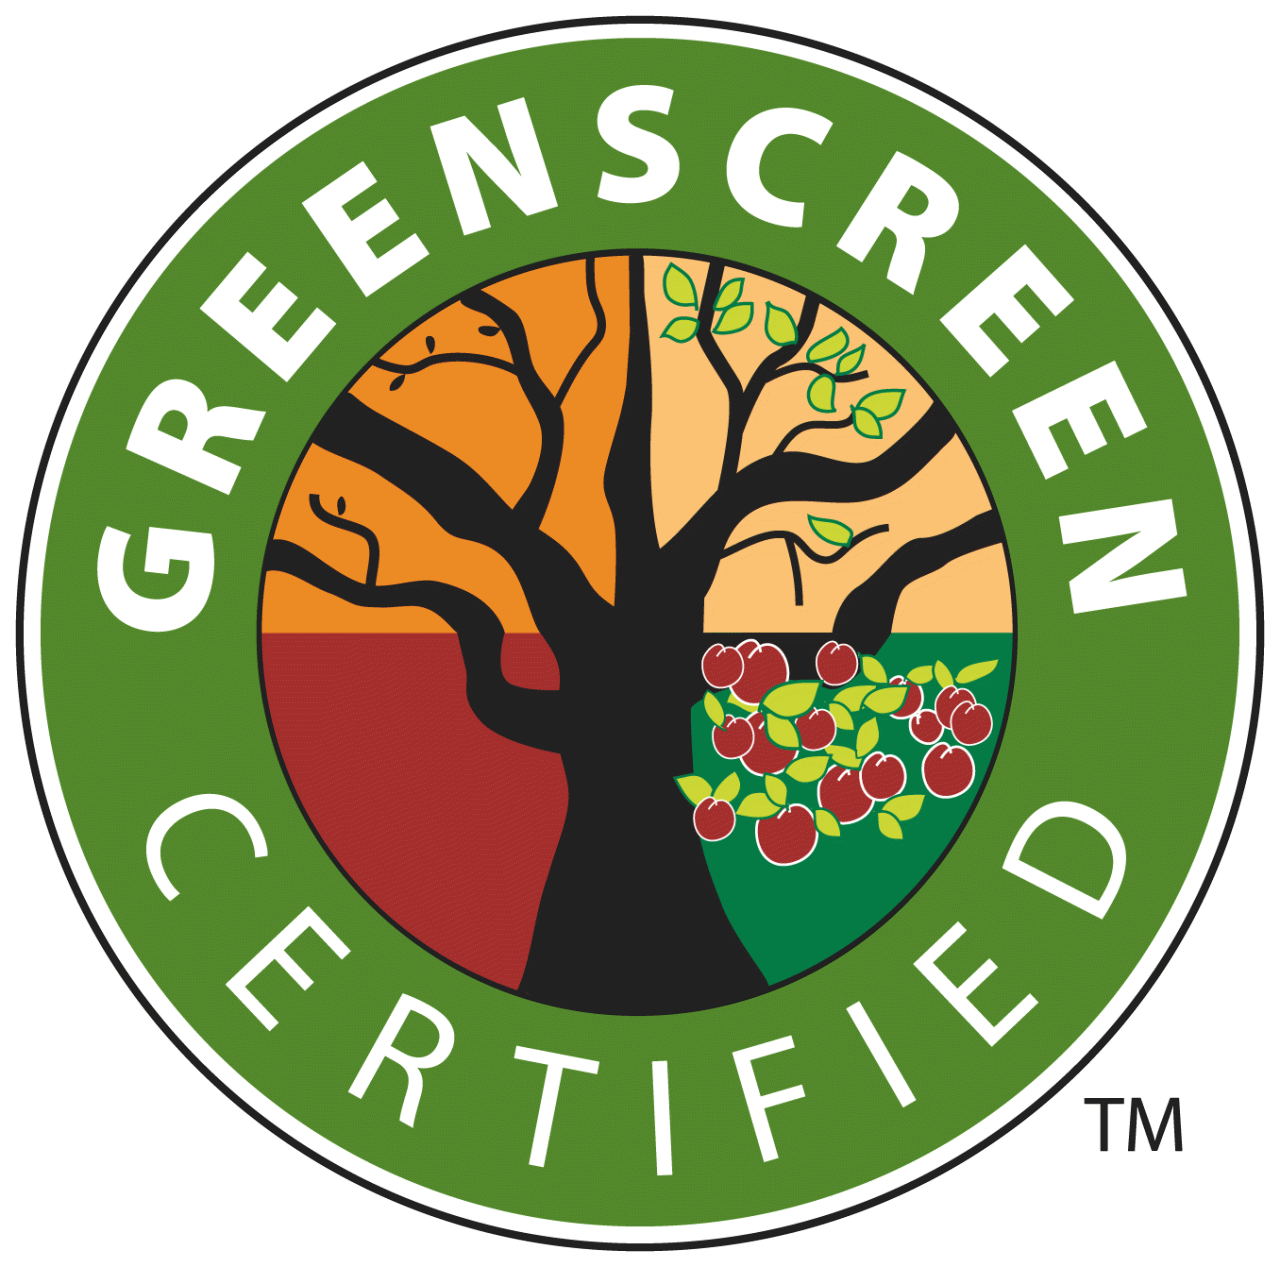 Greenscreen certified logo